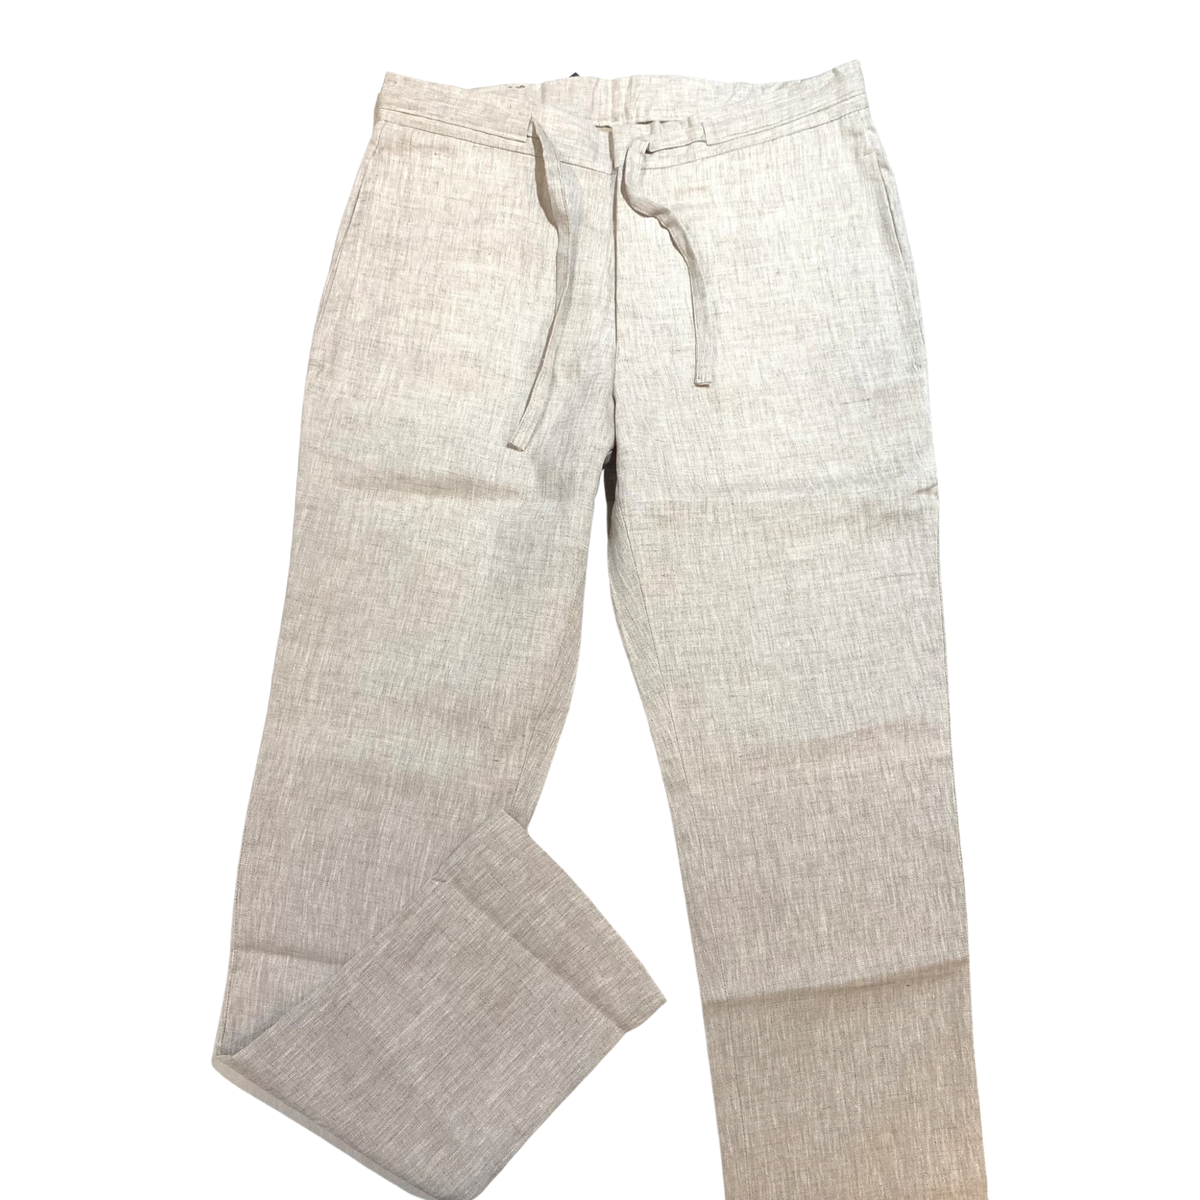 Lanzzino Natural Oatmeal Linen High-end Pants - Dudes Boutique